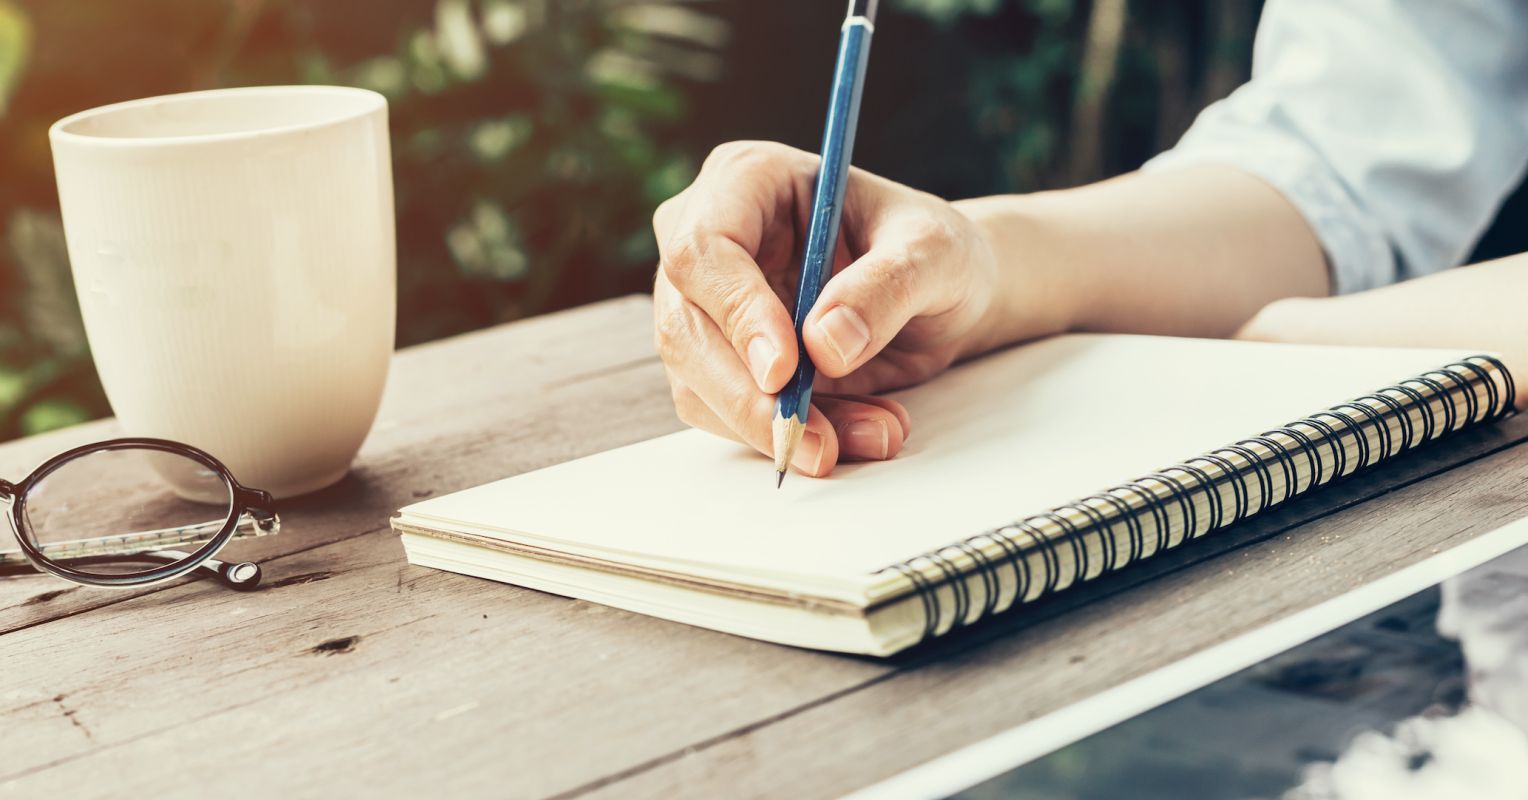 Journaling: The Healing Power Of The Pen